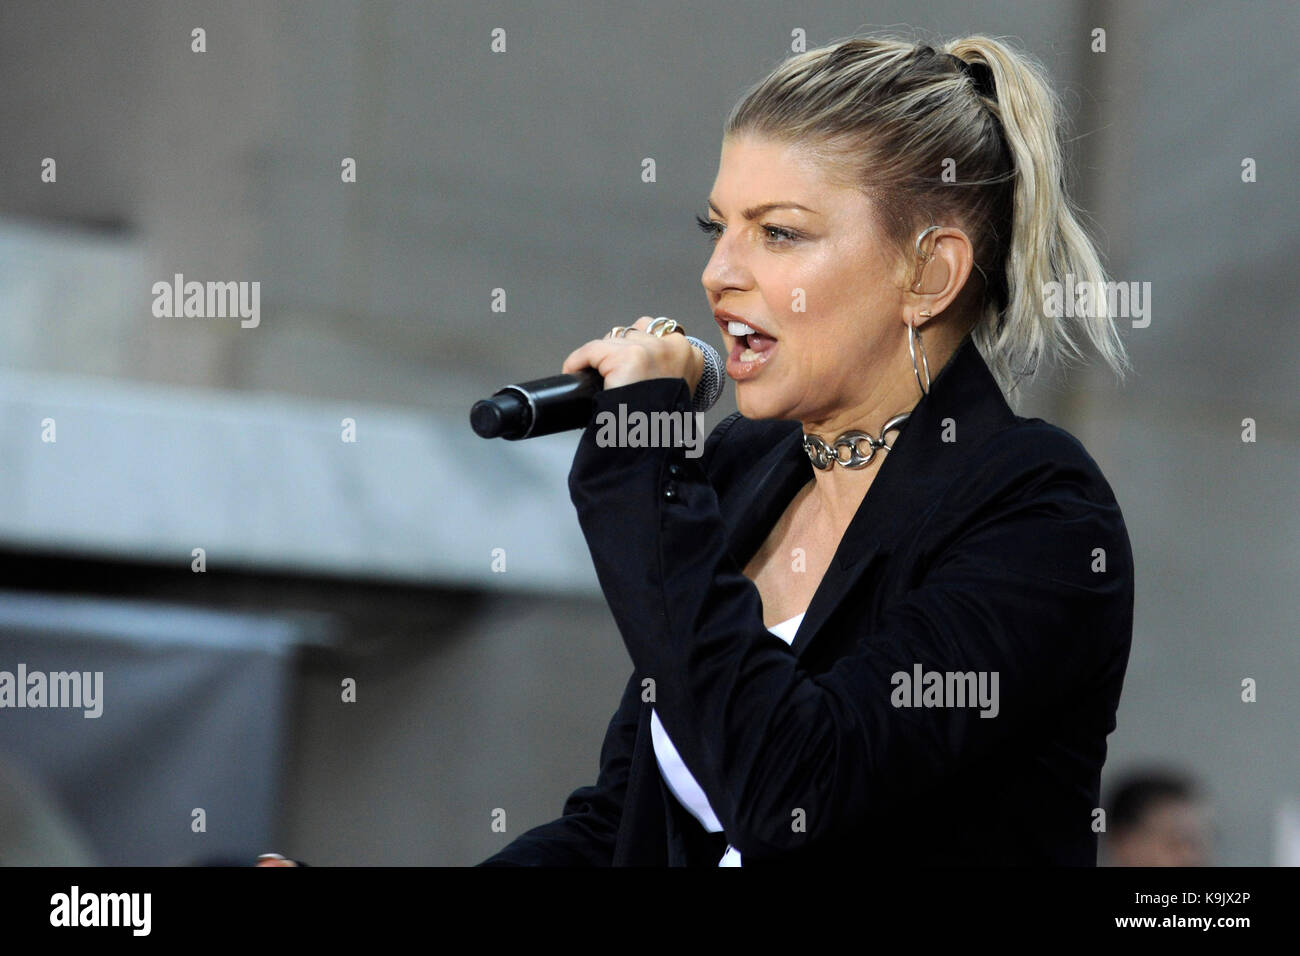 New York, New York, USA. September 2017. Fergie live auf der Bühne während der "NBC Today Show Citi Concert Series" am Rockefeller Plaza am 22. September 2017 in New York City. Quelle: Geisler-Fotopress/Alamy Live News Stockfoto